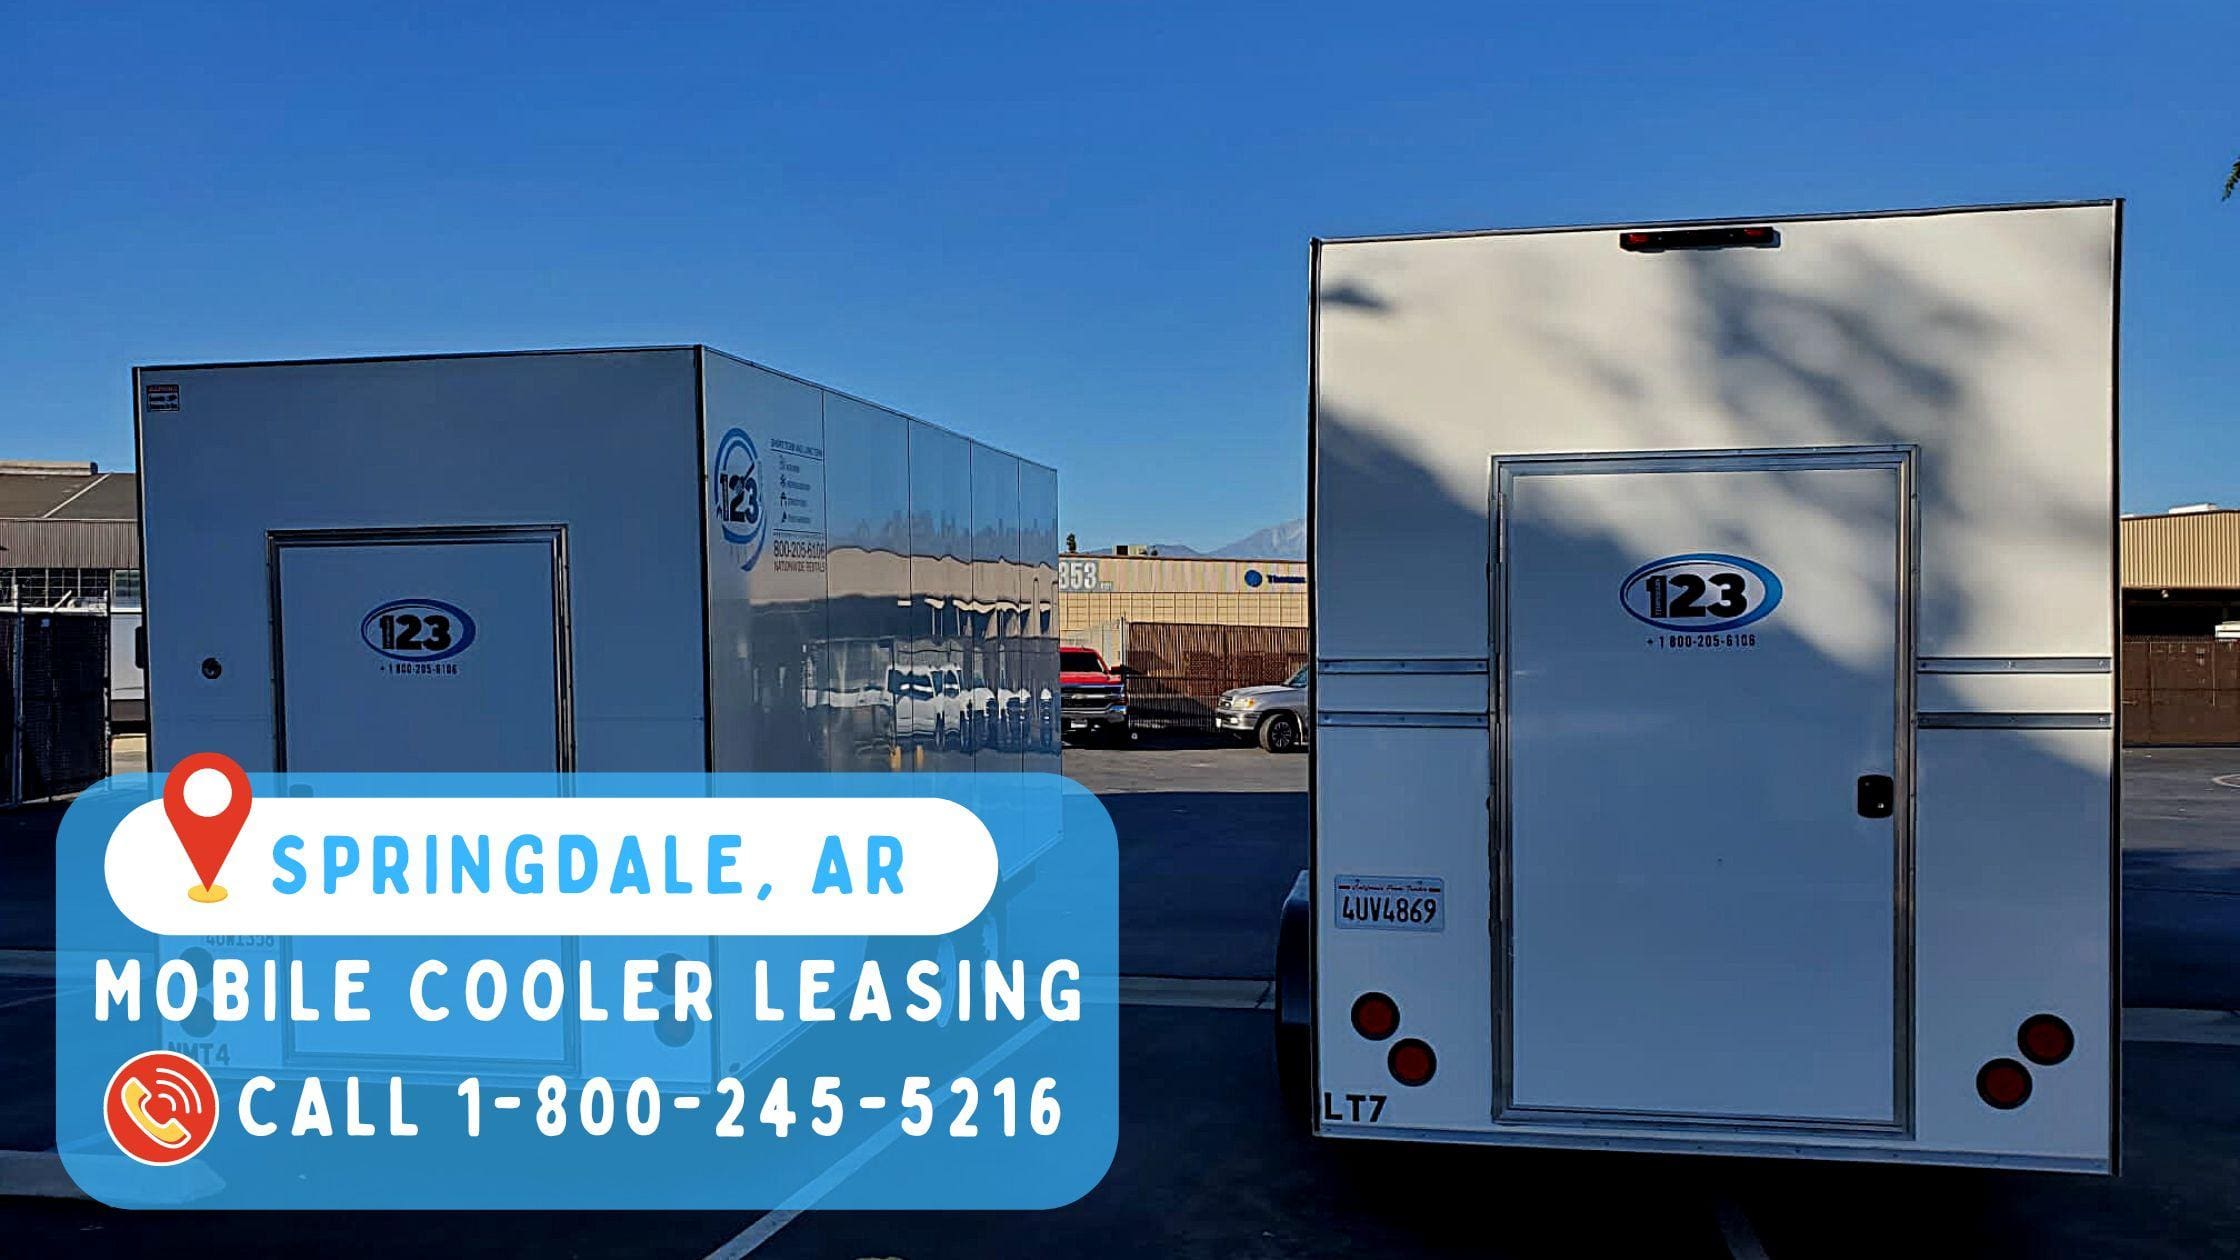 Mobile Cooler Leasing in Springdale, AR